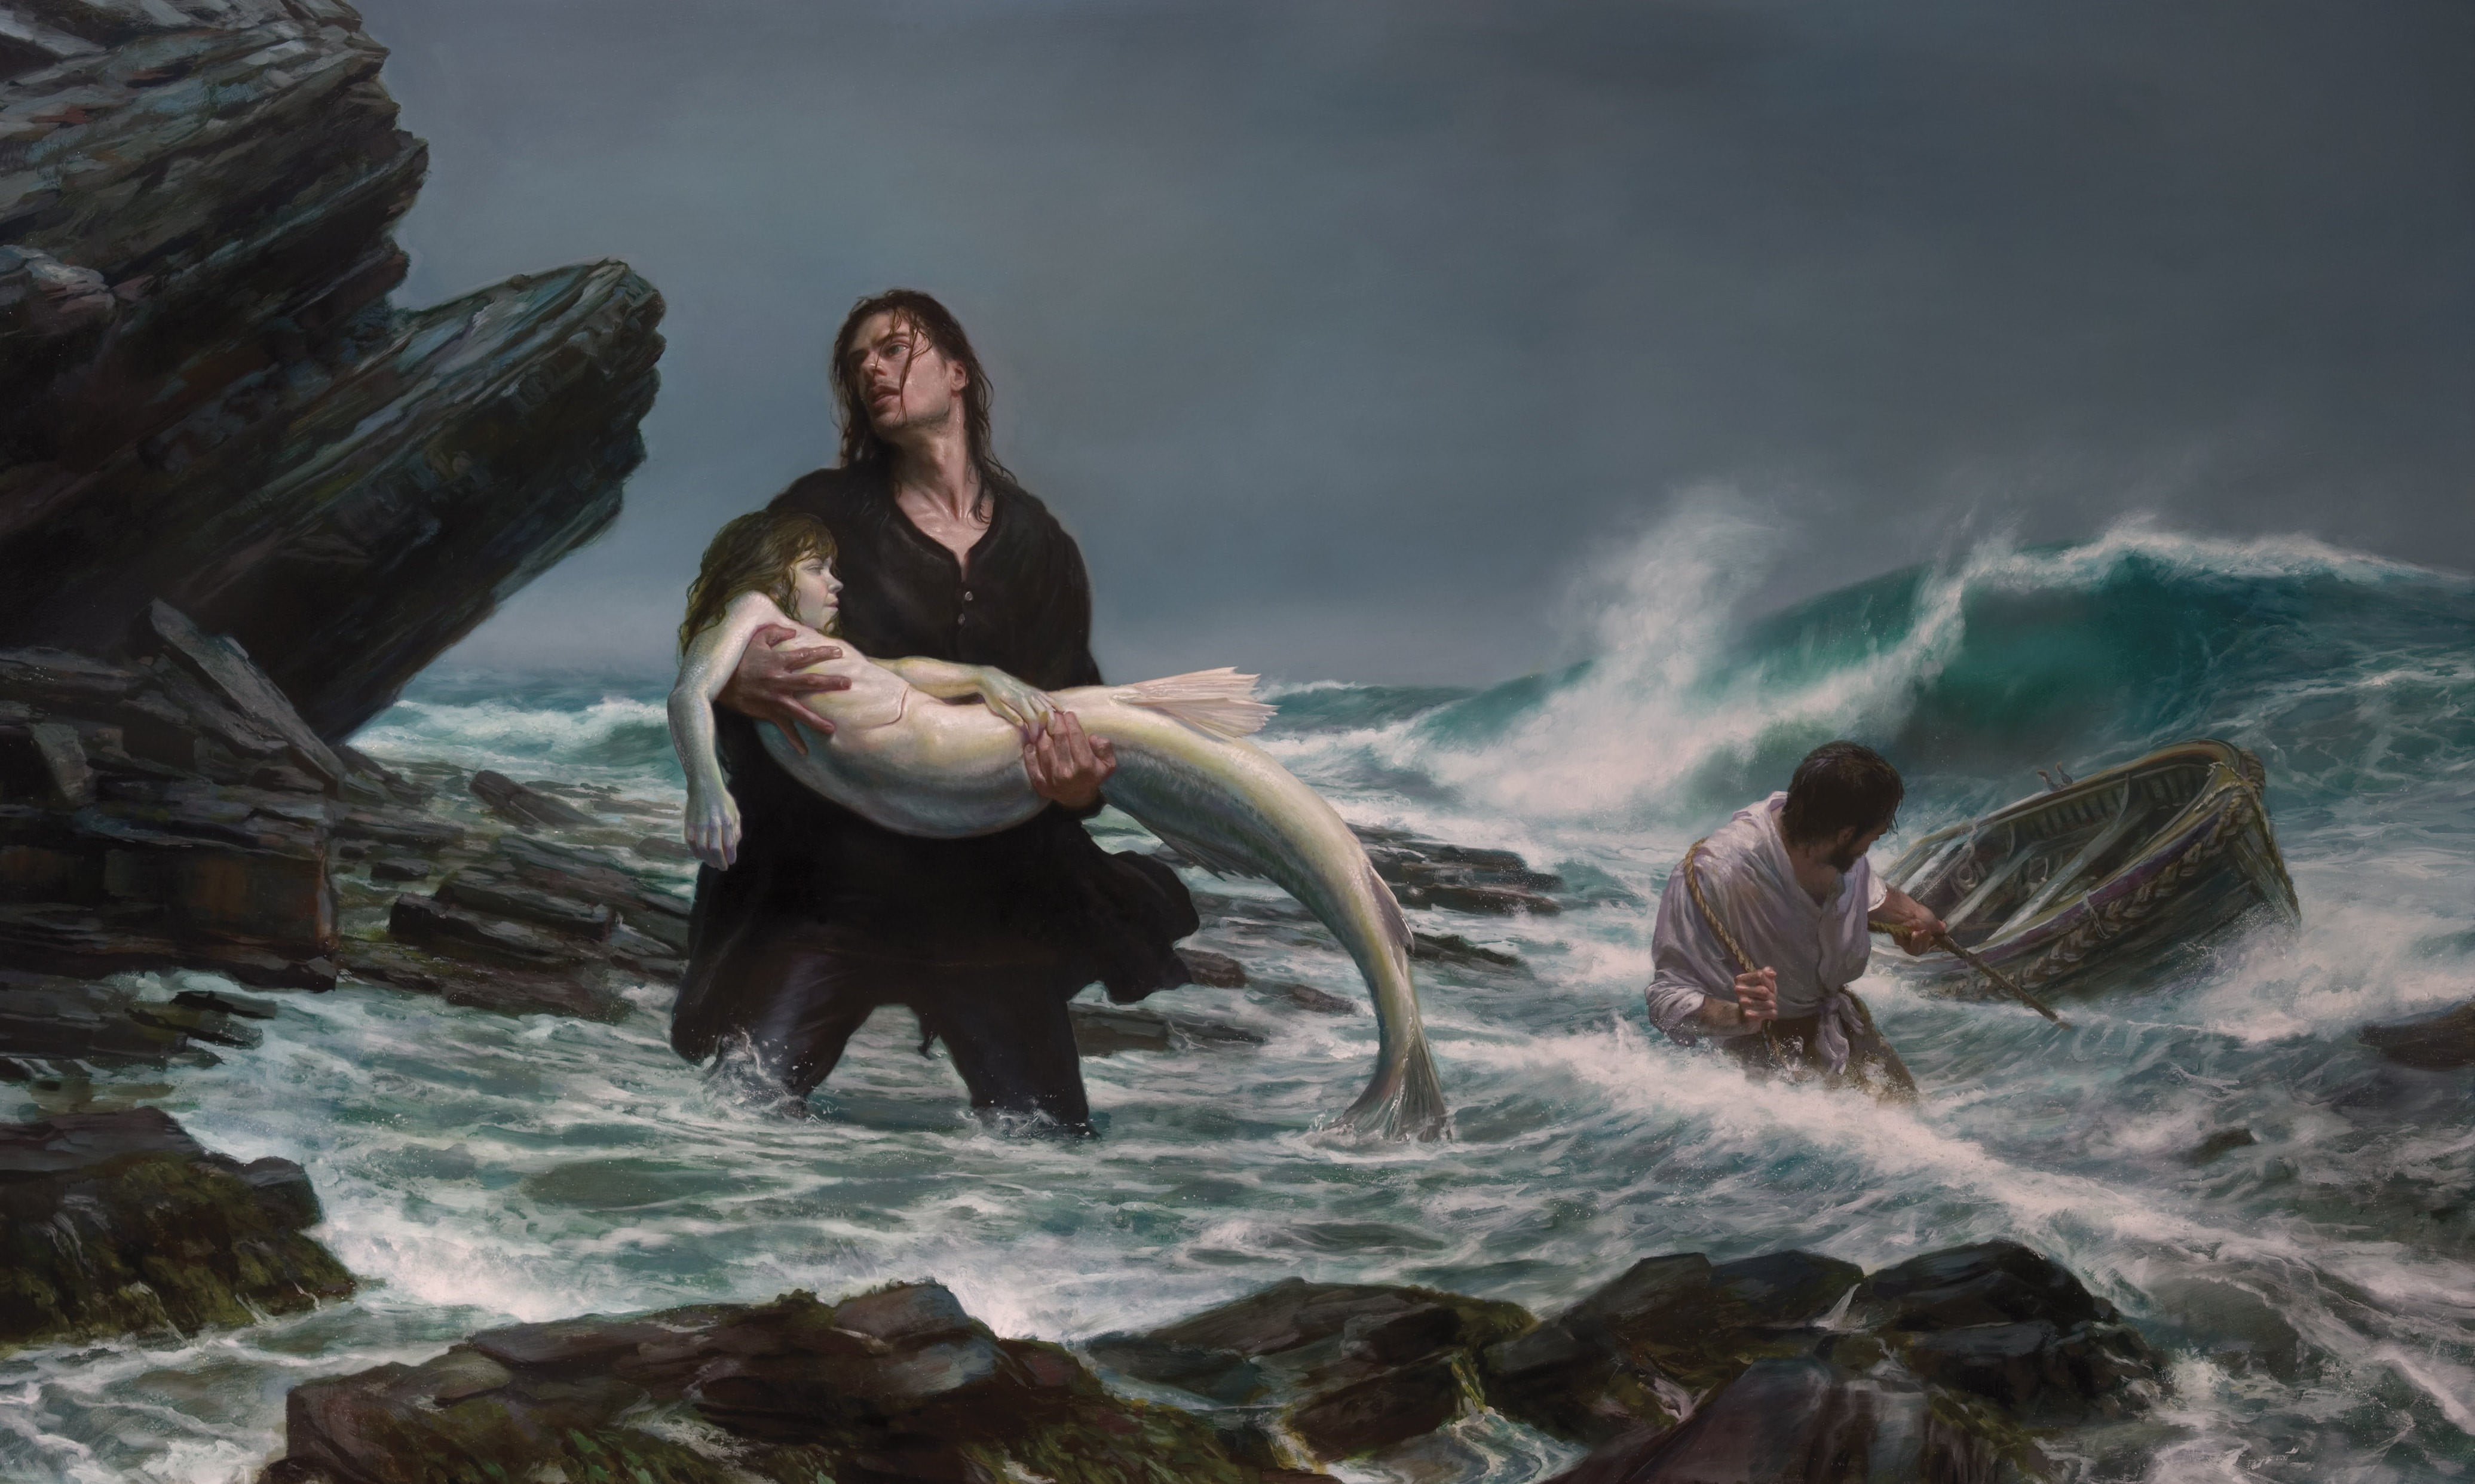 man-carrying-mermaid-illustration-mermaids-artwork-fantasy-art